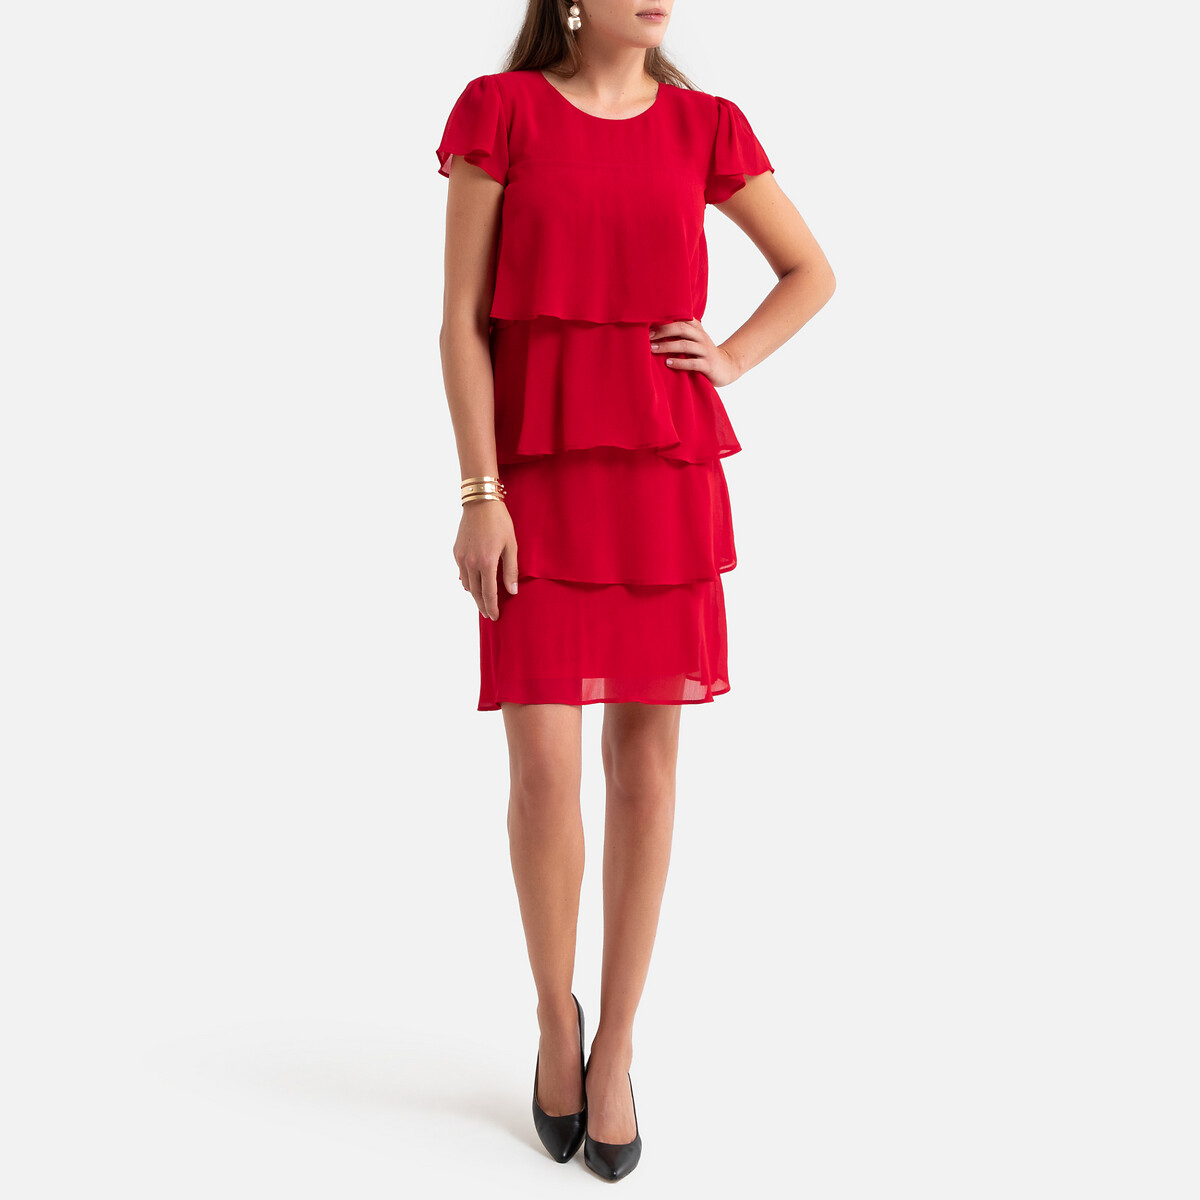 Платье La Redoute С воланом из жатого крепа 38 (FR) - 44 (RUS) красный, размер 38 (FR) - 44 (RUS) С воланом из жатого крепа 38 (FR) - 44 (RUS) красный - фото 2